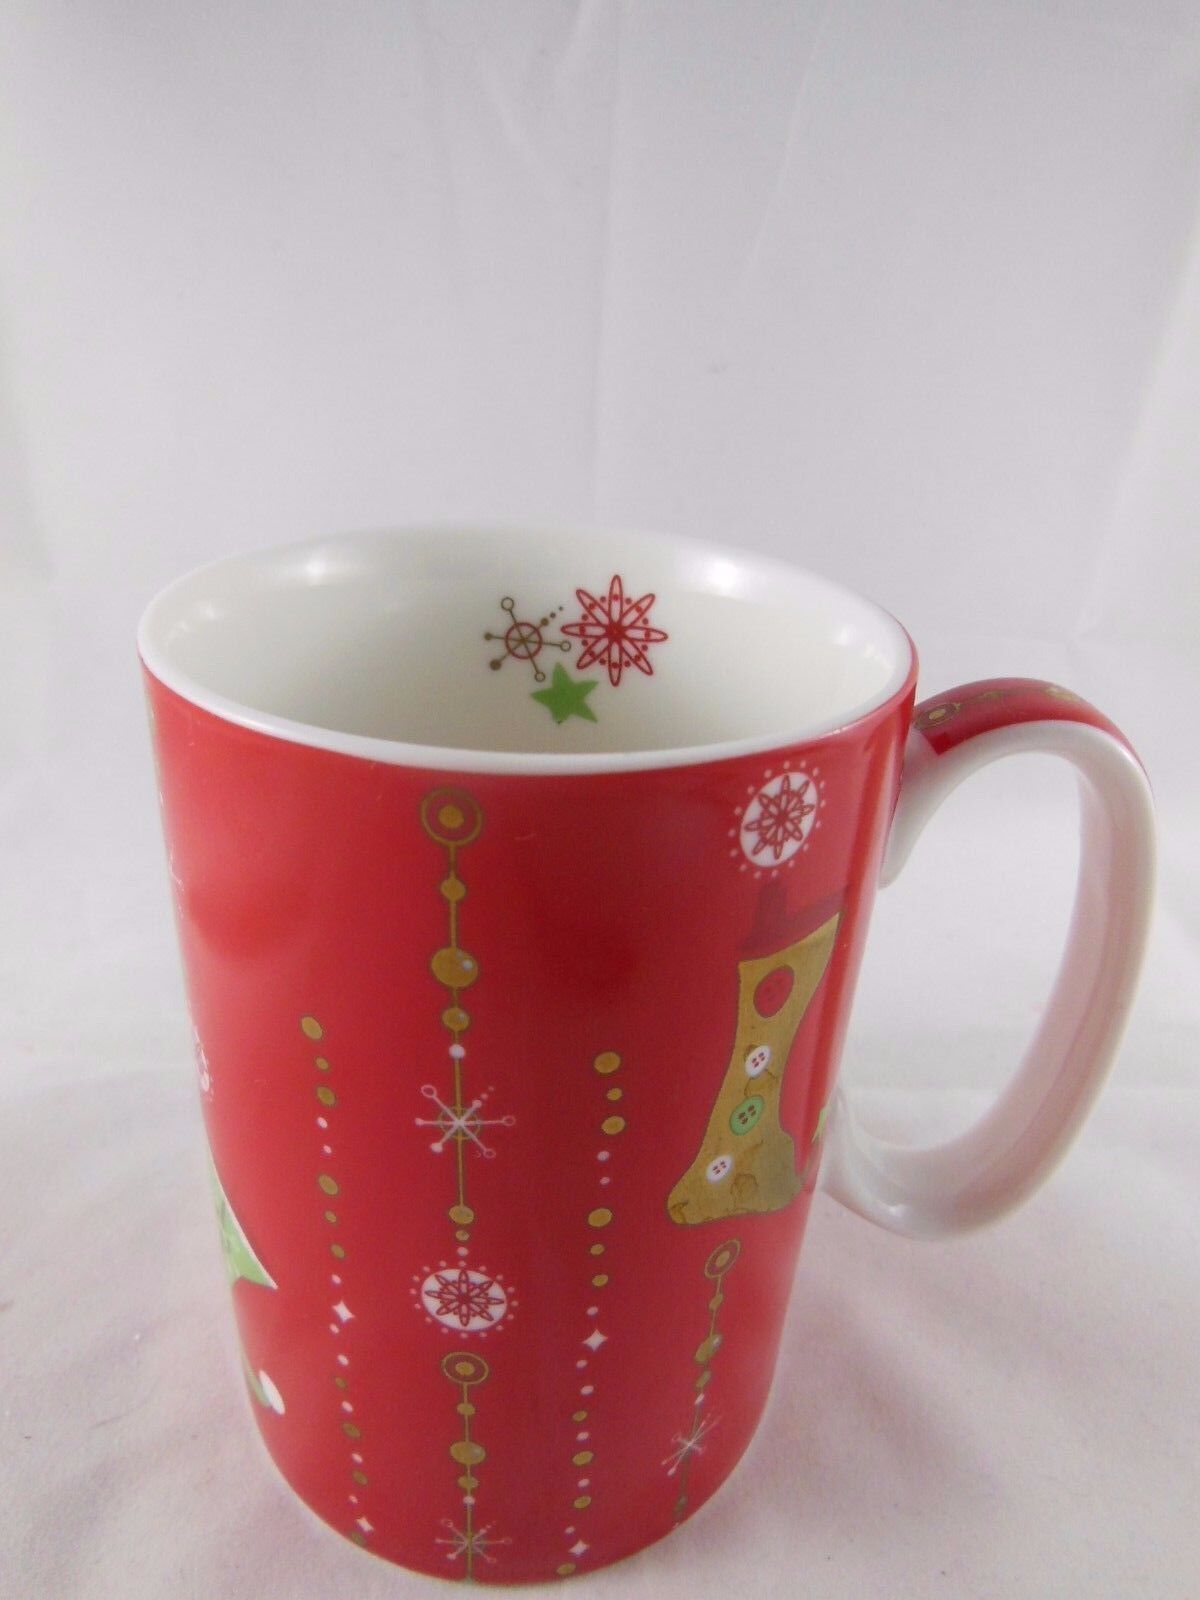 Starbucks Holiday Gold Red Coffee Mug  Christmas Stockings Snowflakes 14 oz 2006